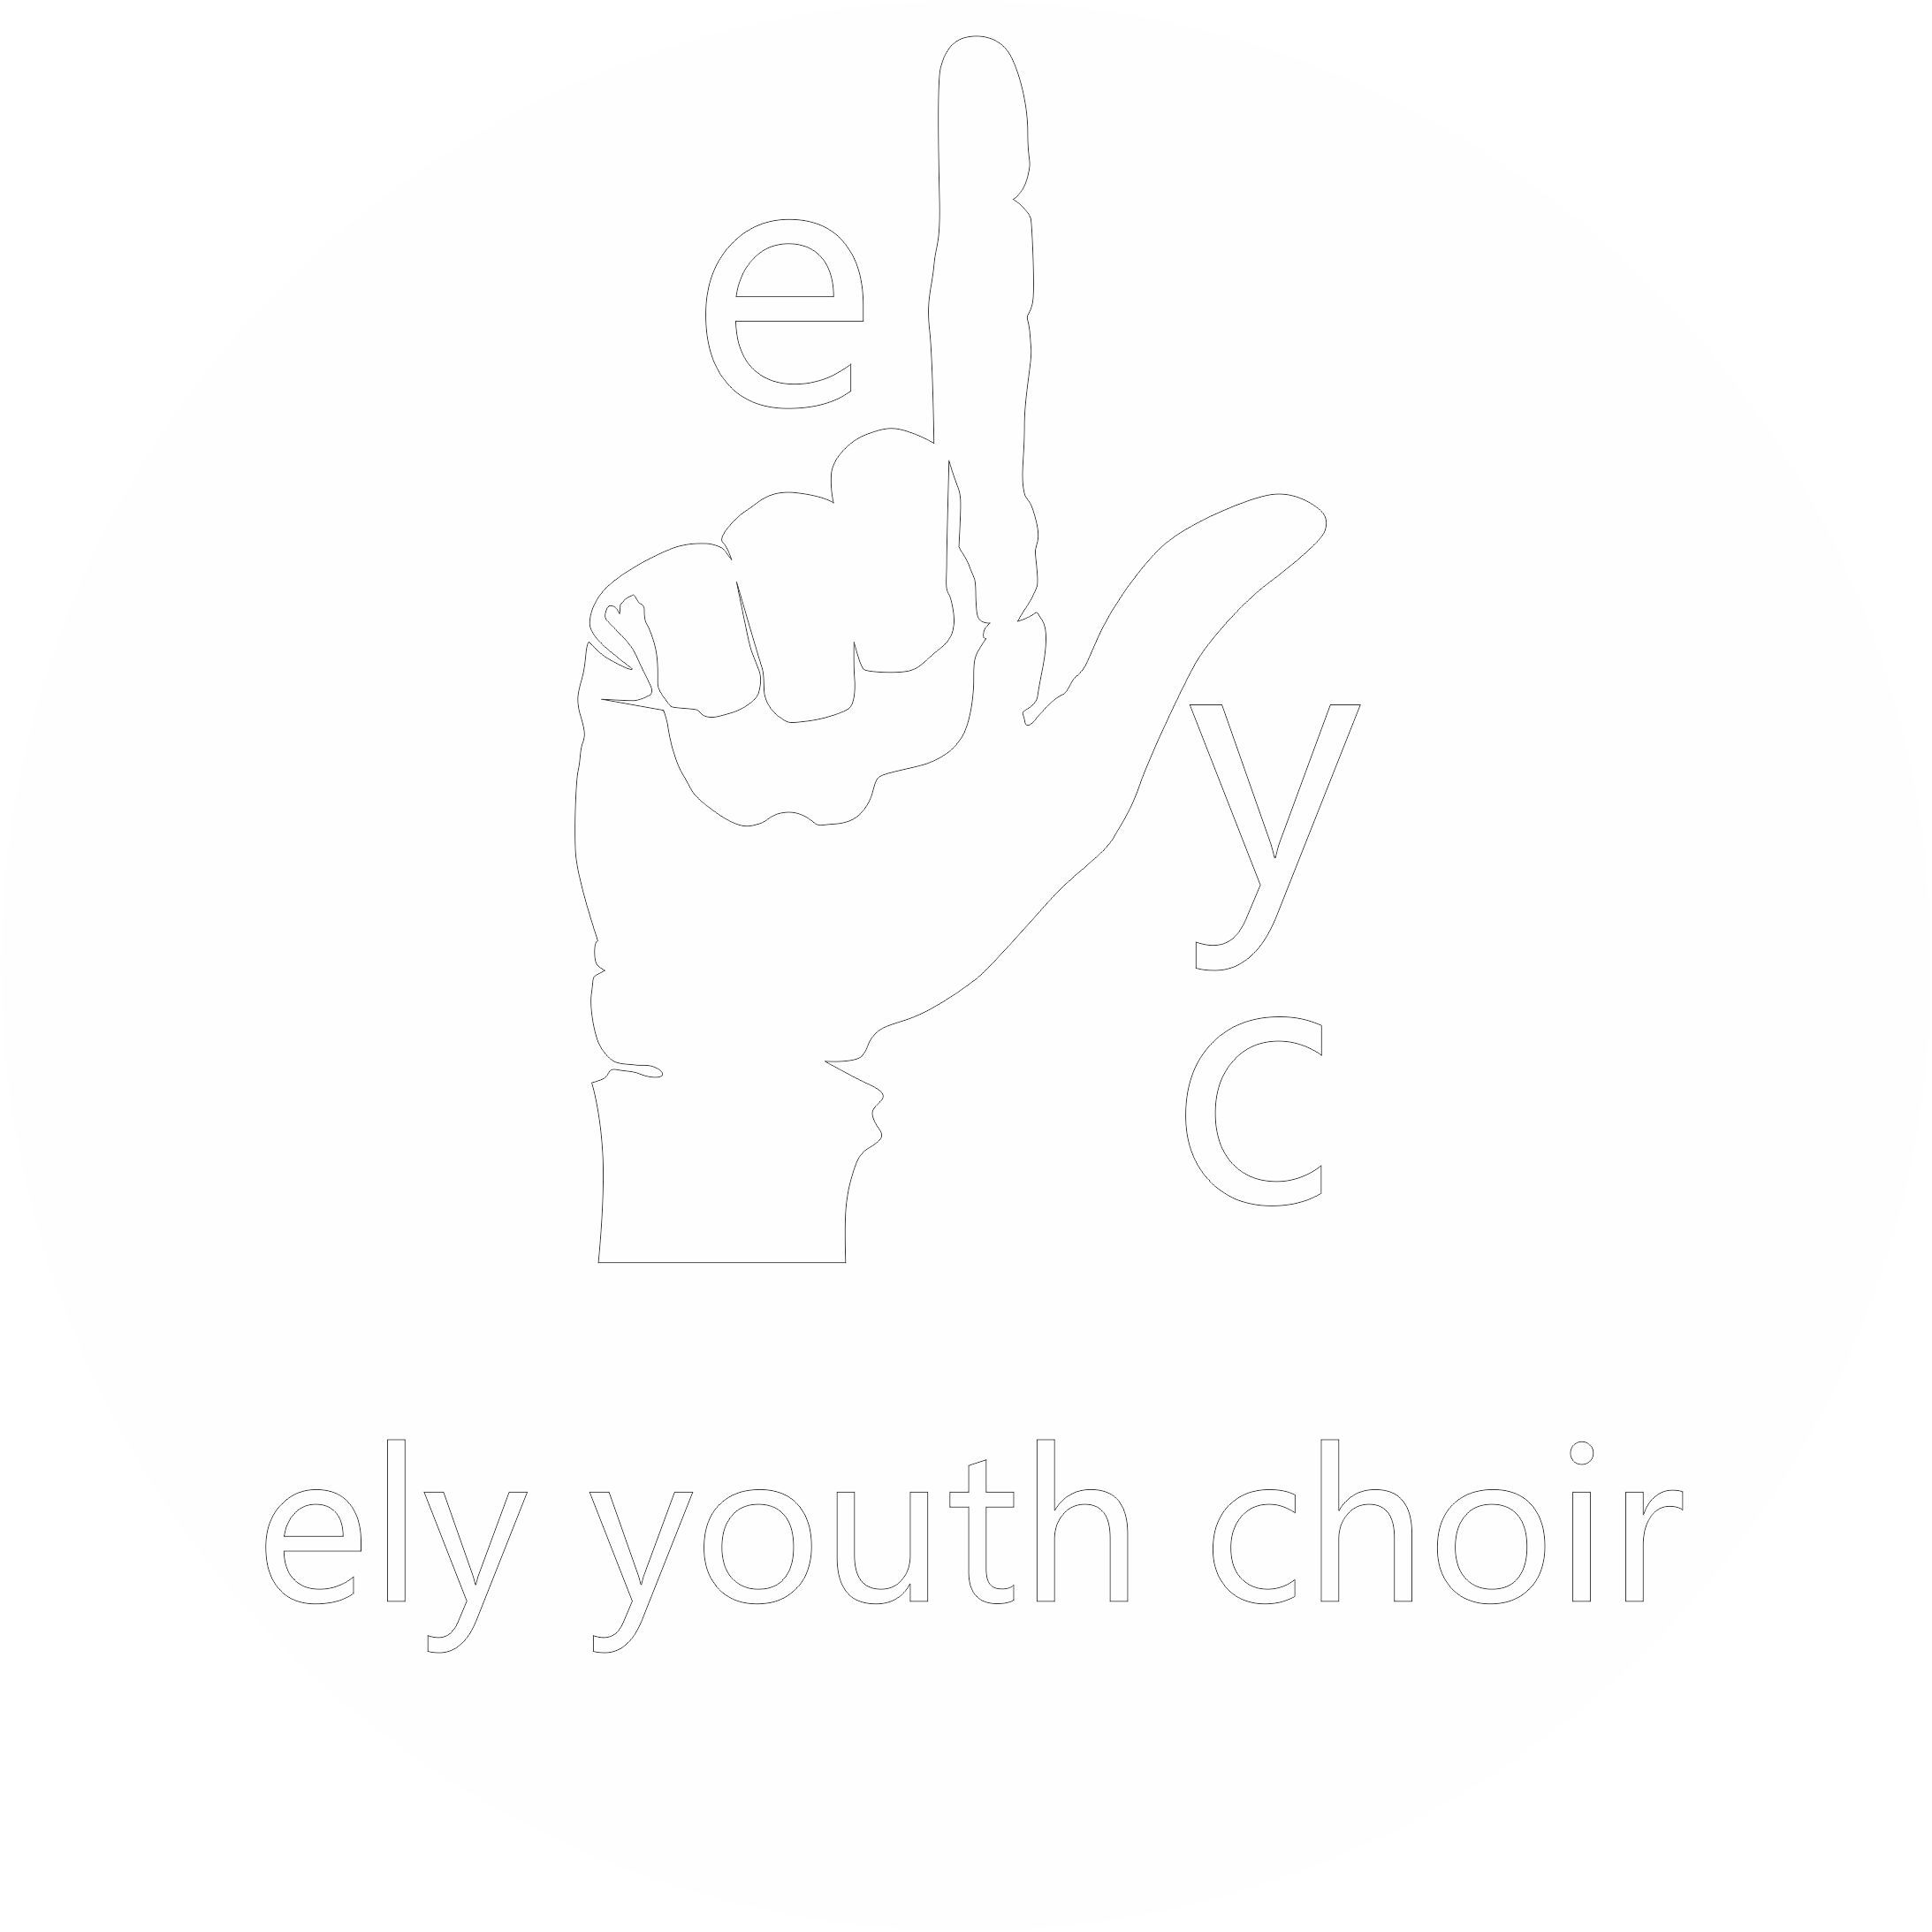 Jonathan - Ely Youth Choir